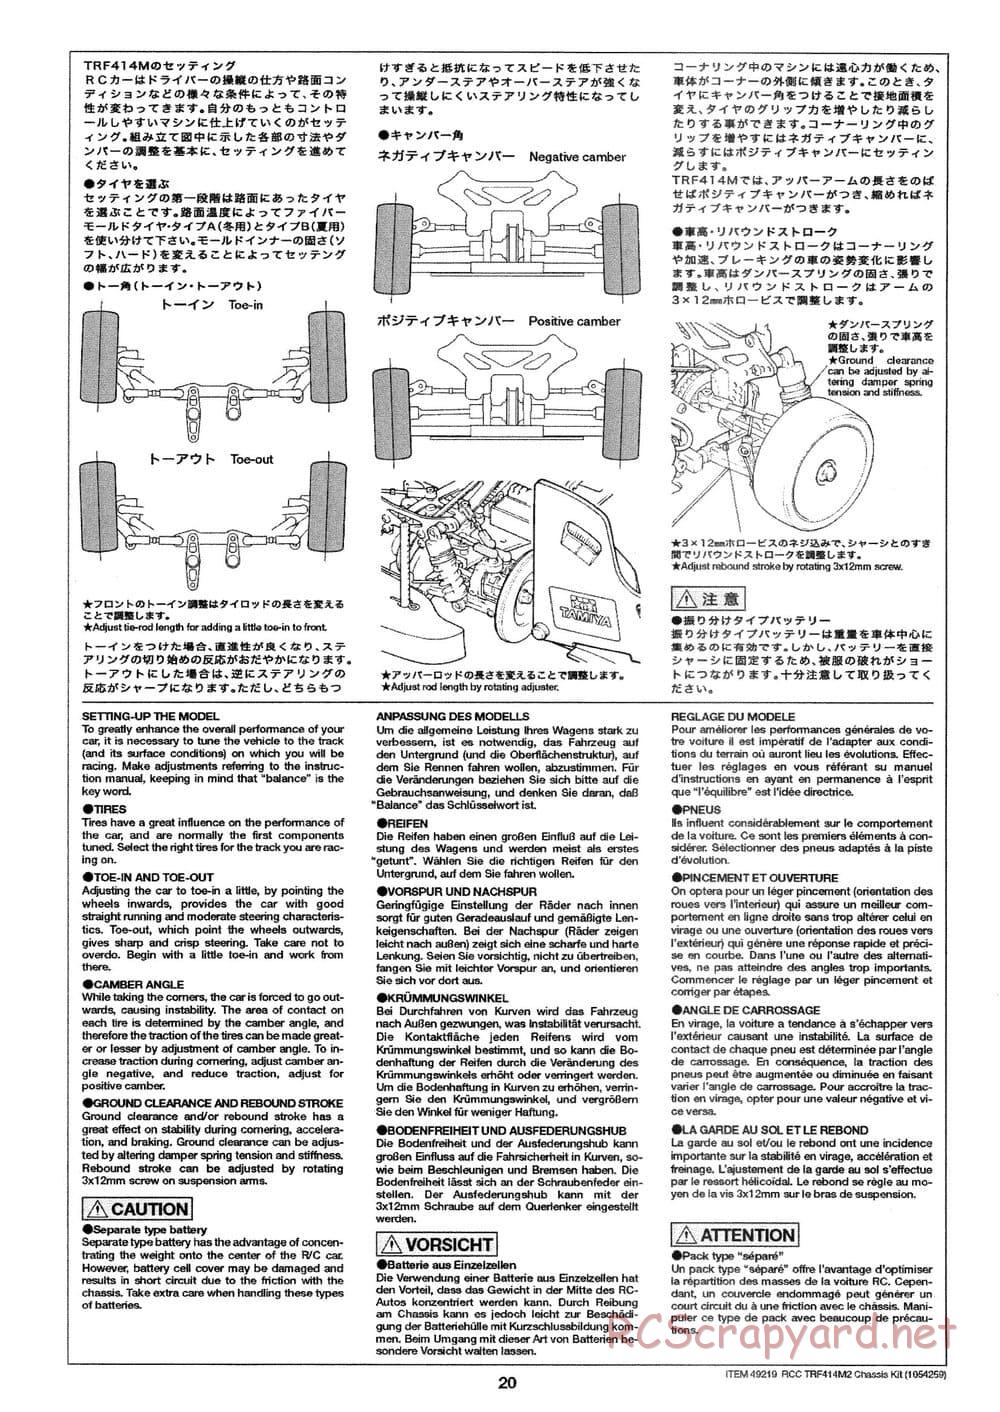 Tamiya - TRF414M II Chassis - Manual - Page 20